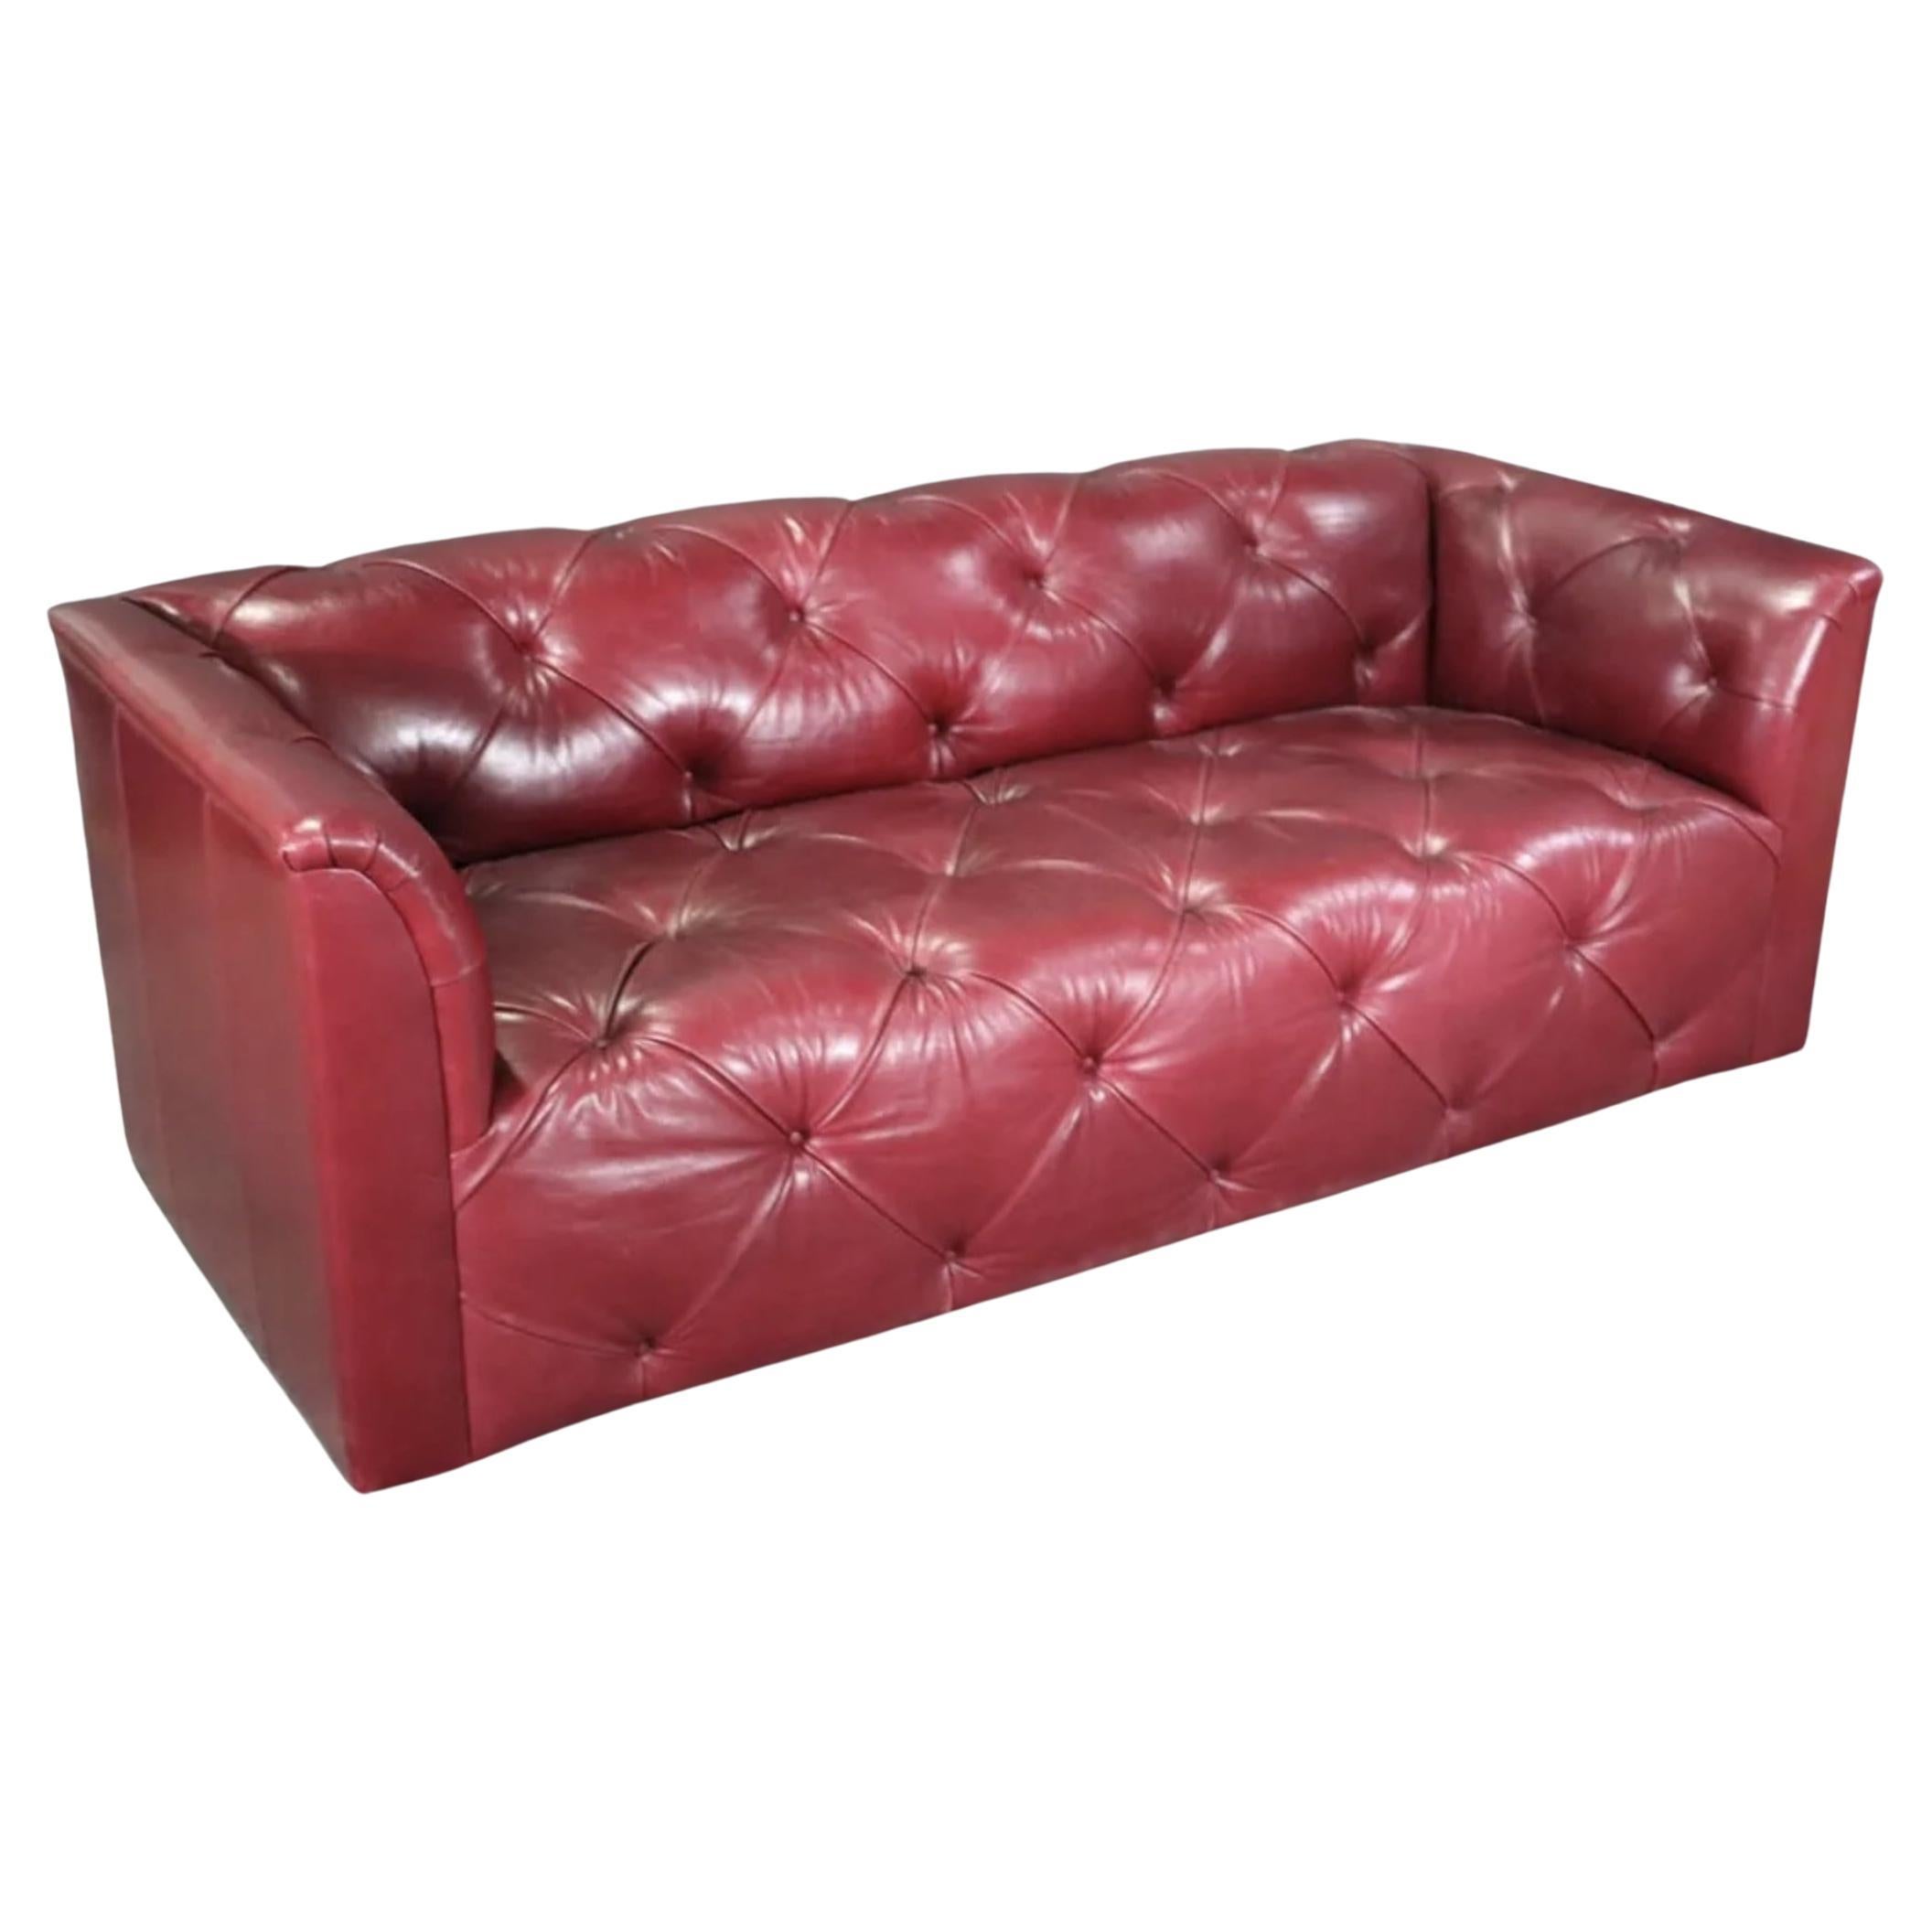 J. Robert Scott 'Eve' Chesterfield Sofa For Sale